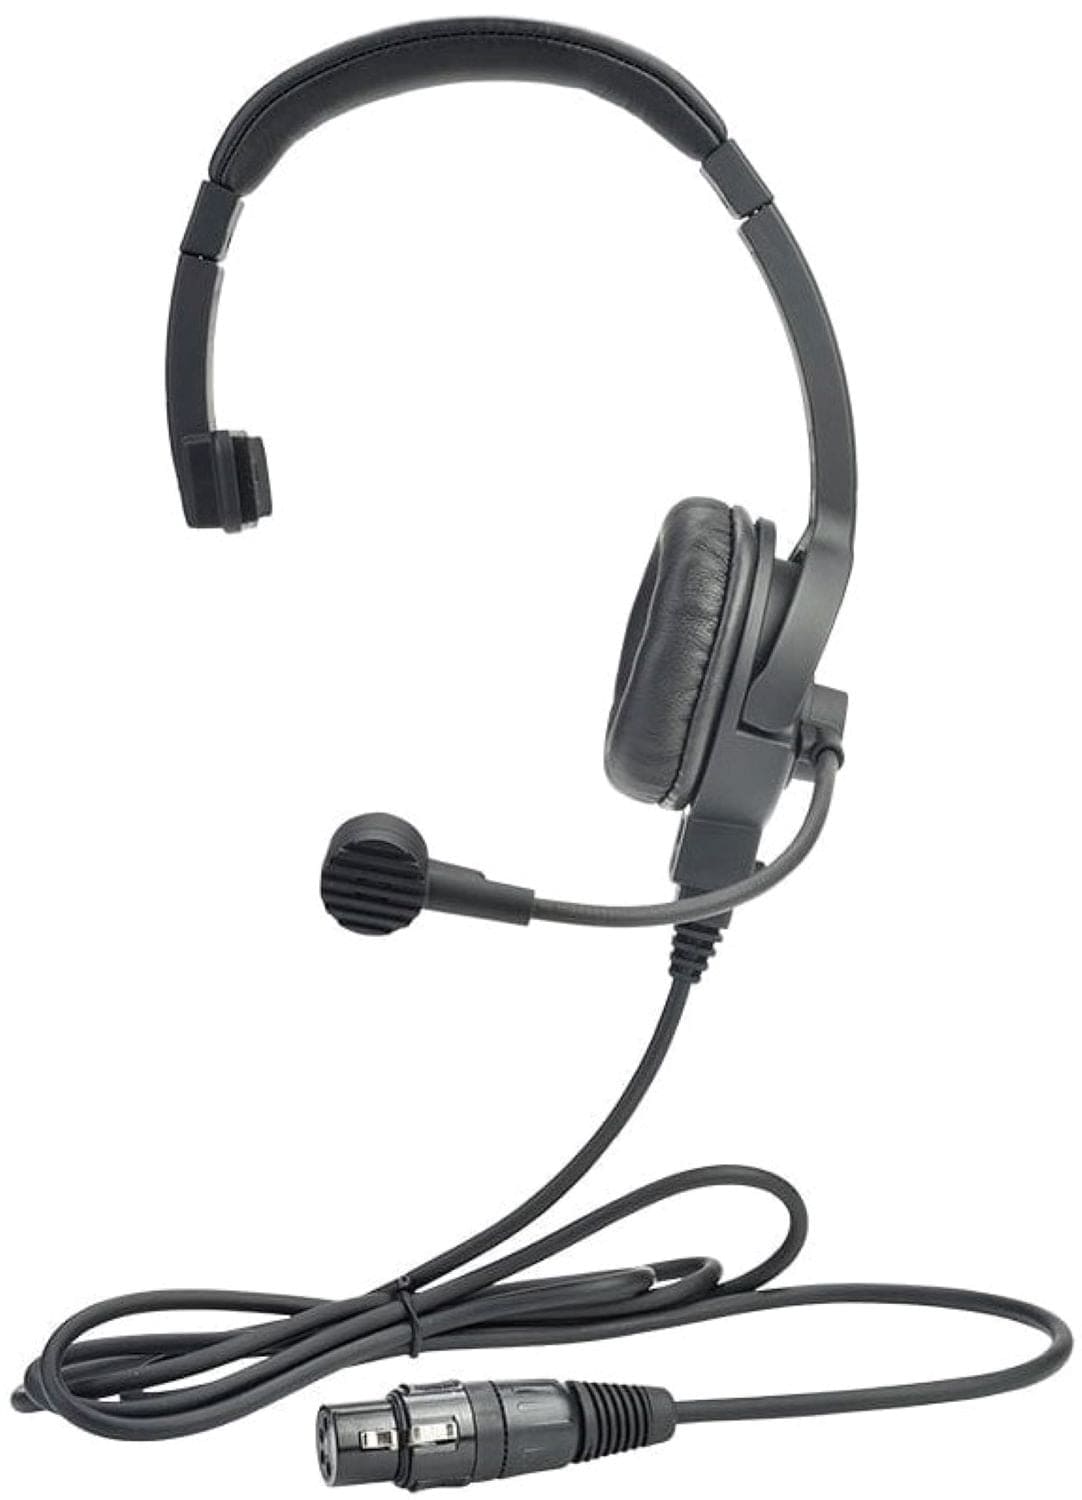 Clear Com CC110XLR4F Single-Ear Intercom Headset - PSSL ProSound and Stage Lighting